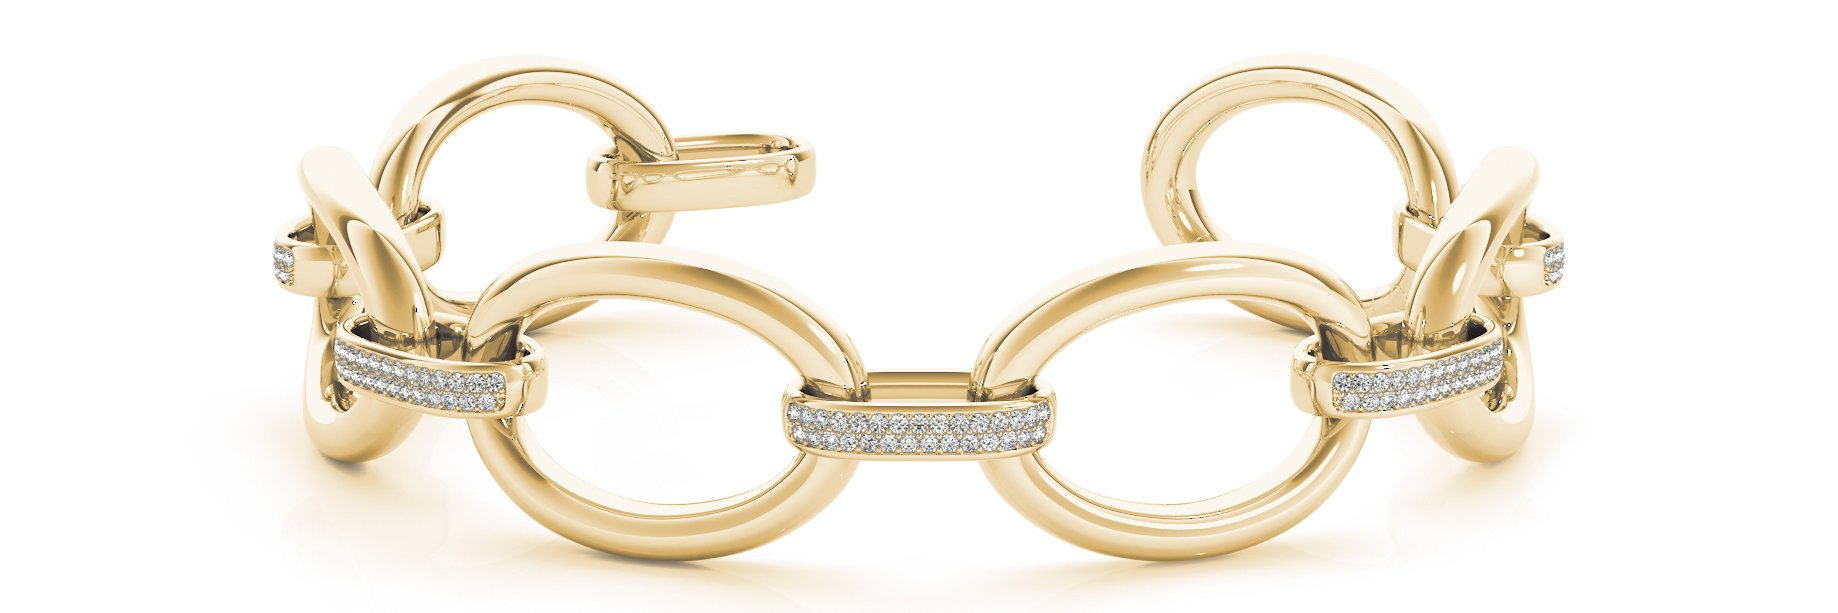 Fancy Diamond Bracelet Ladies 1.58ct tw - 14kt Yellow Gold